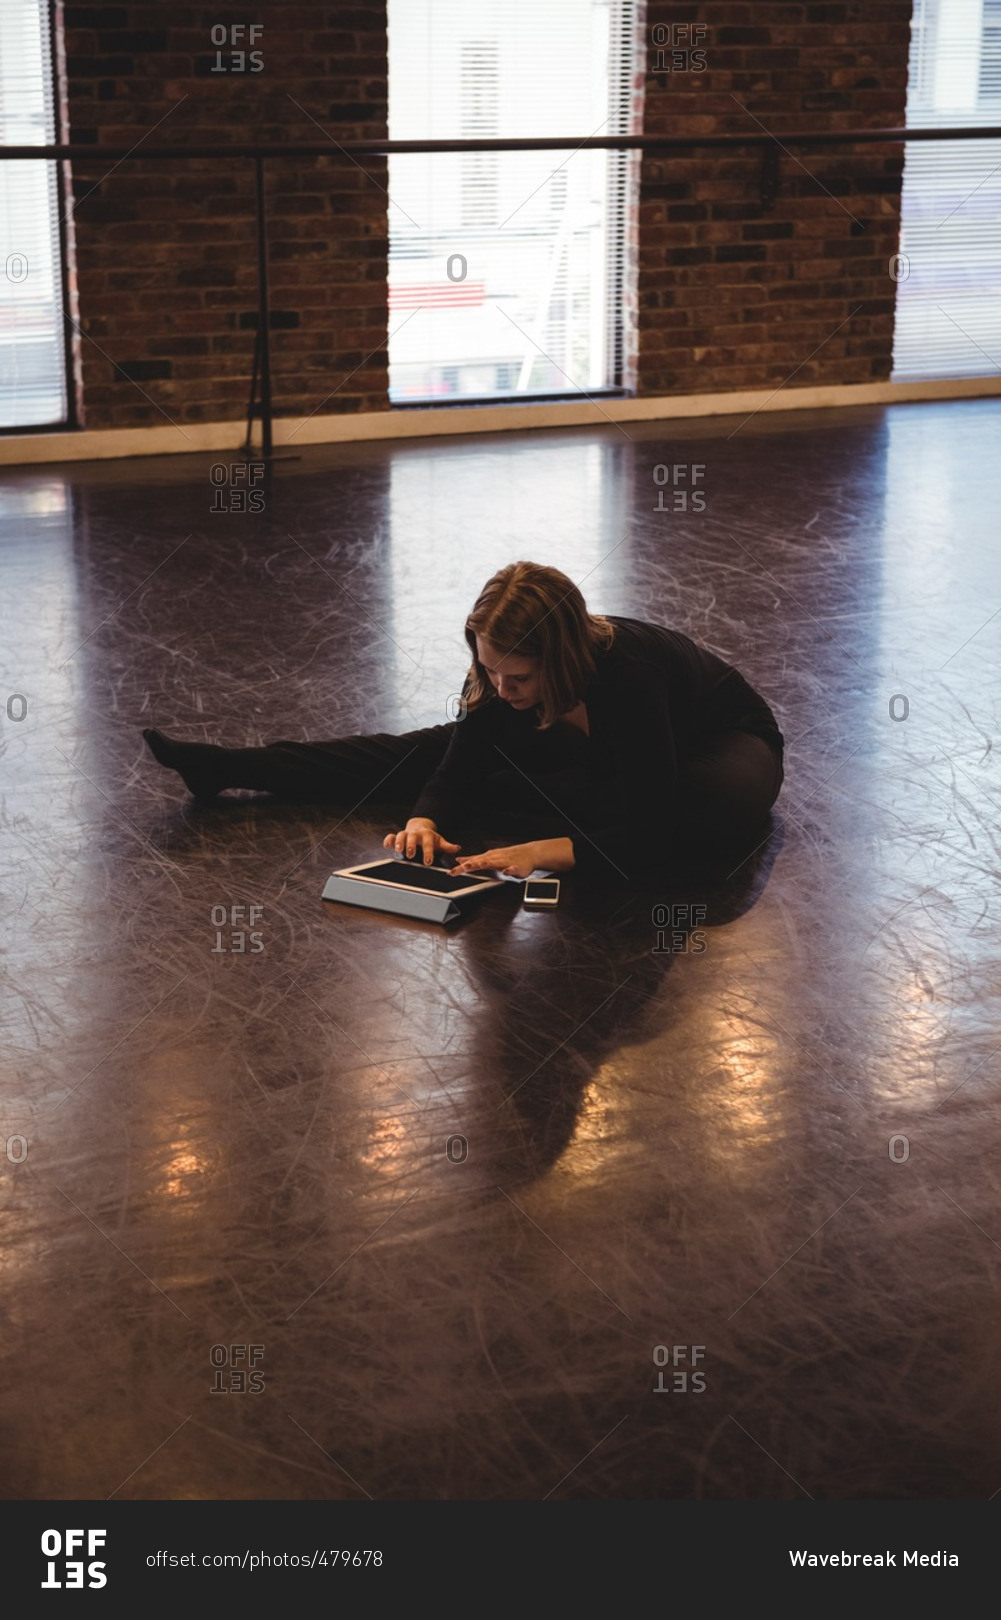 Dancer sitting on floor and using digital tablet in dance studio